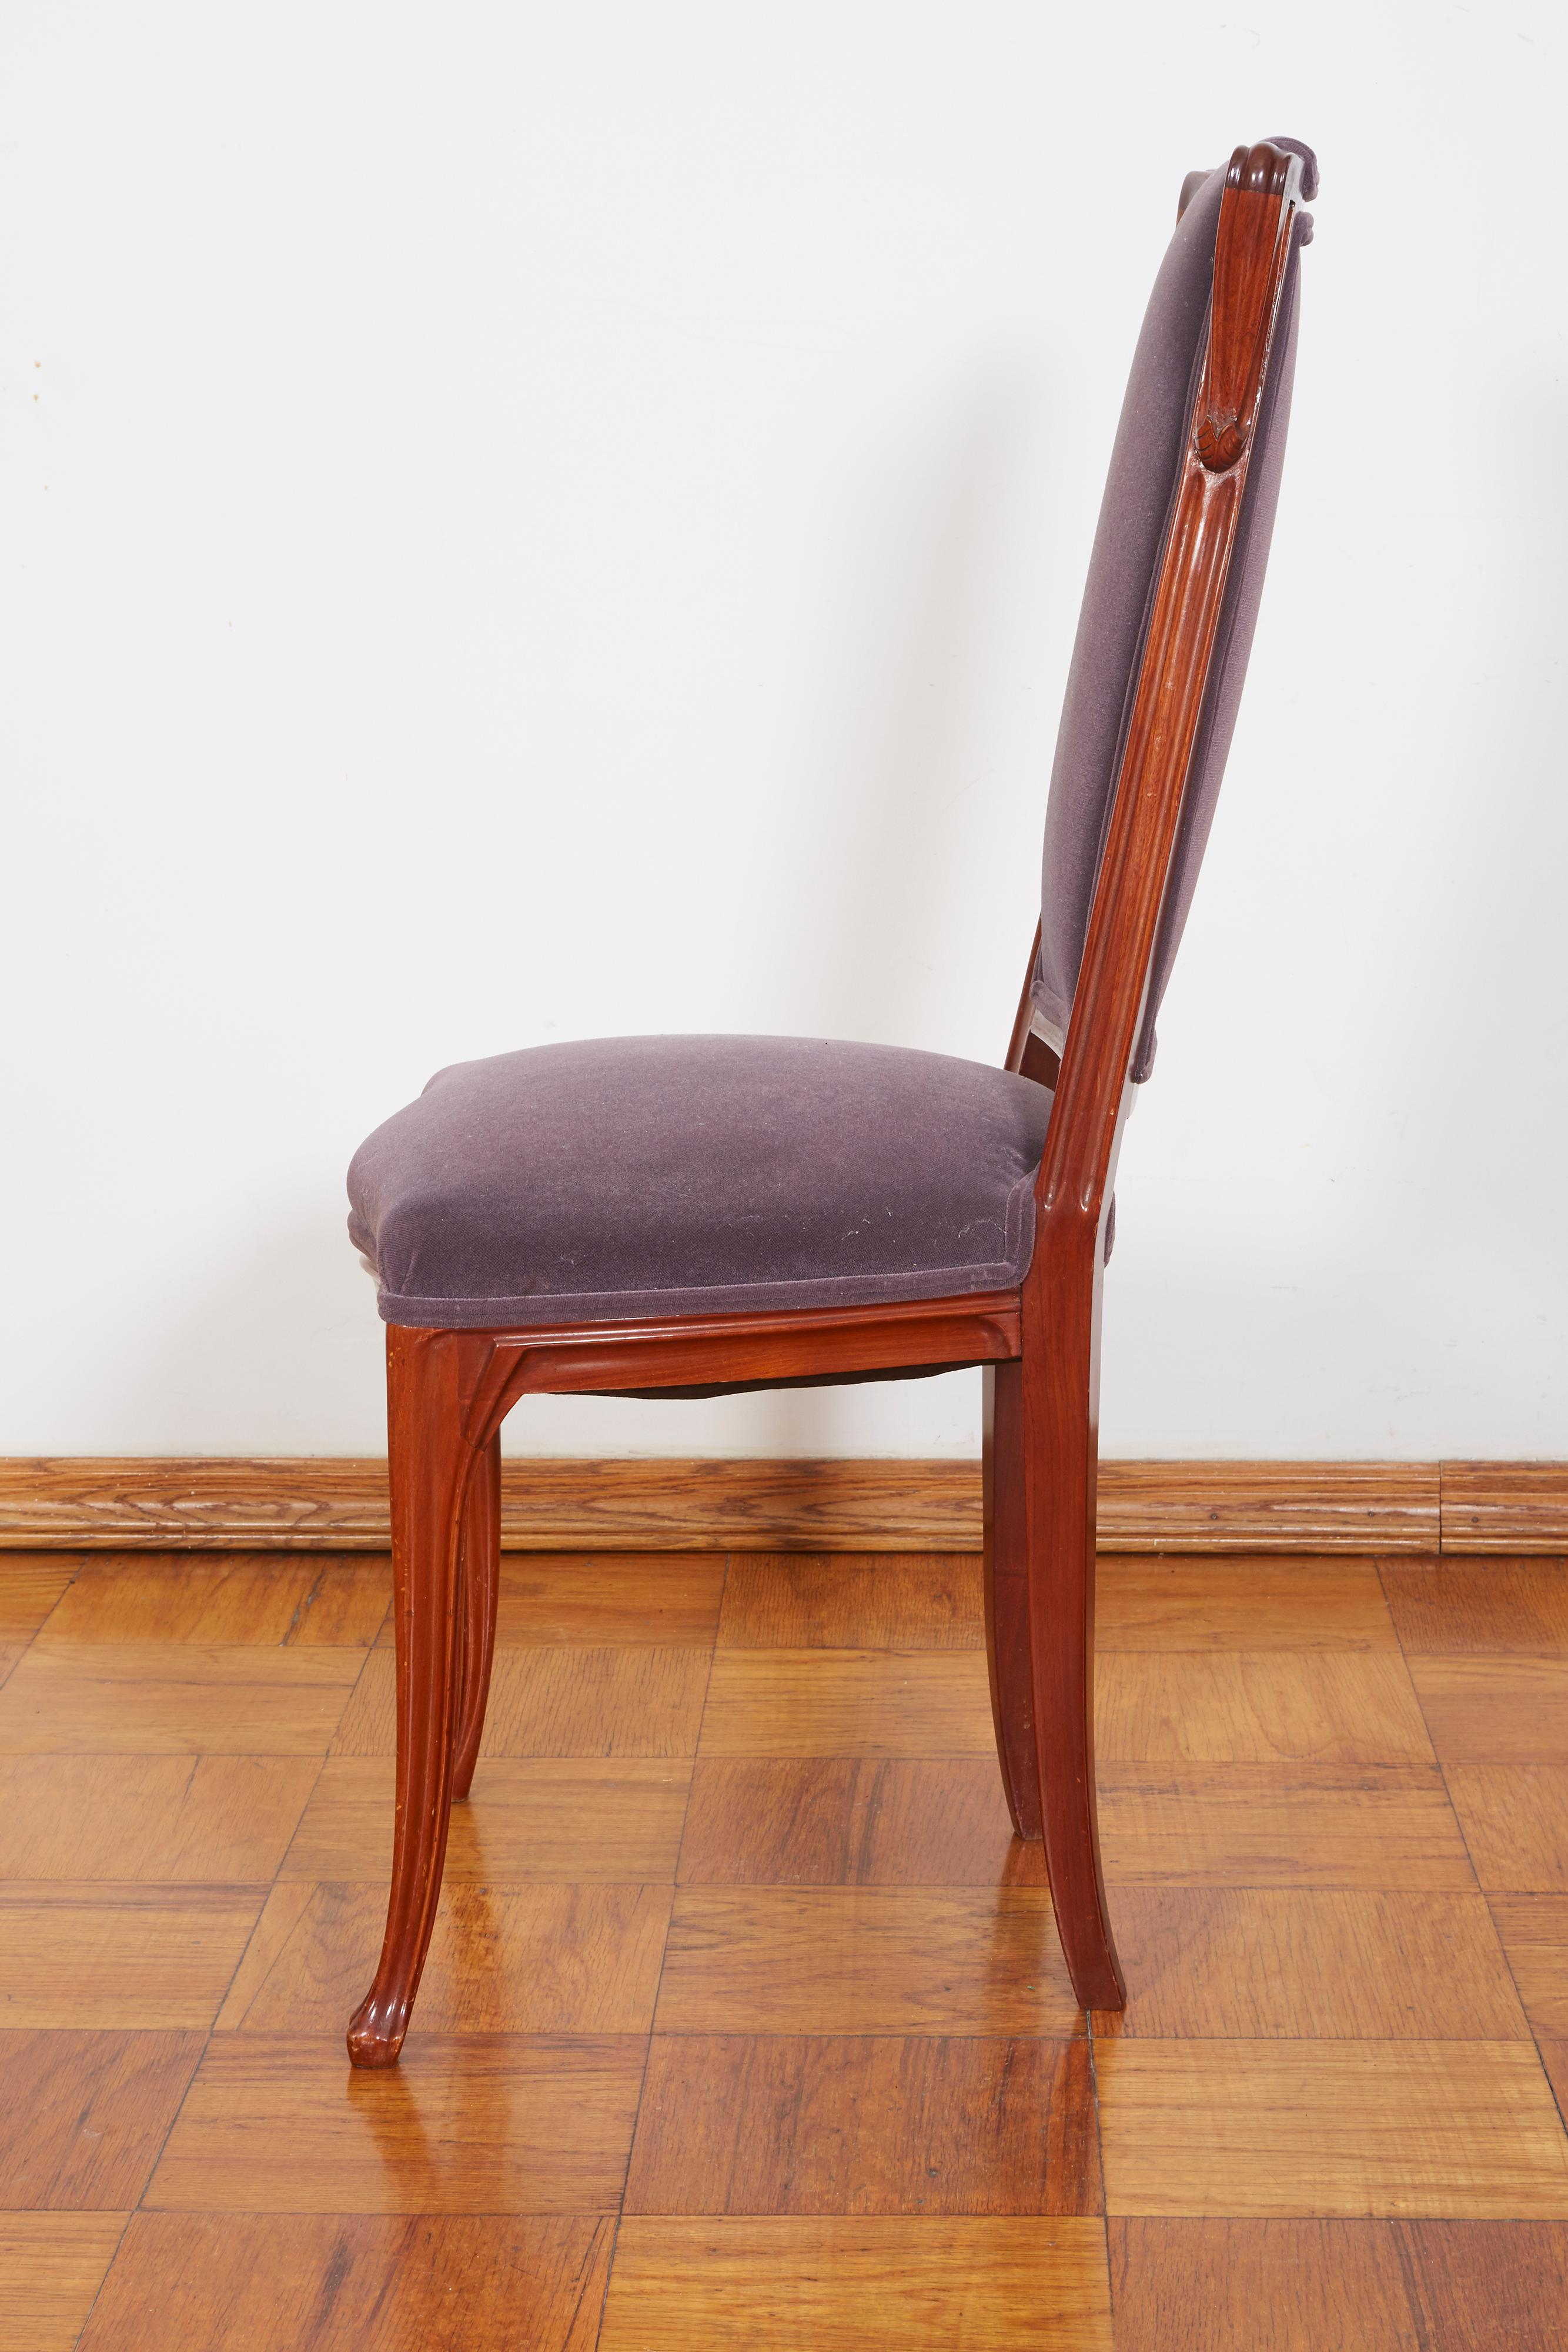 French Art Nouveau Pair of Louis Majorelle Chairs For Sale 2